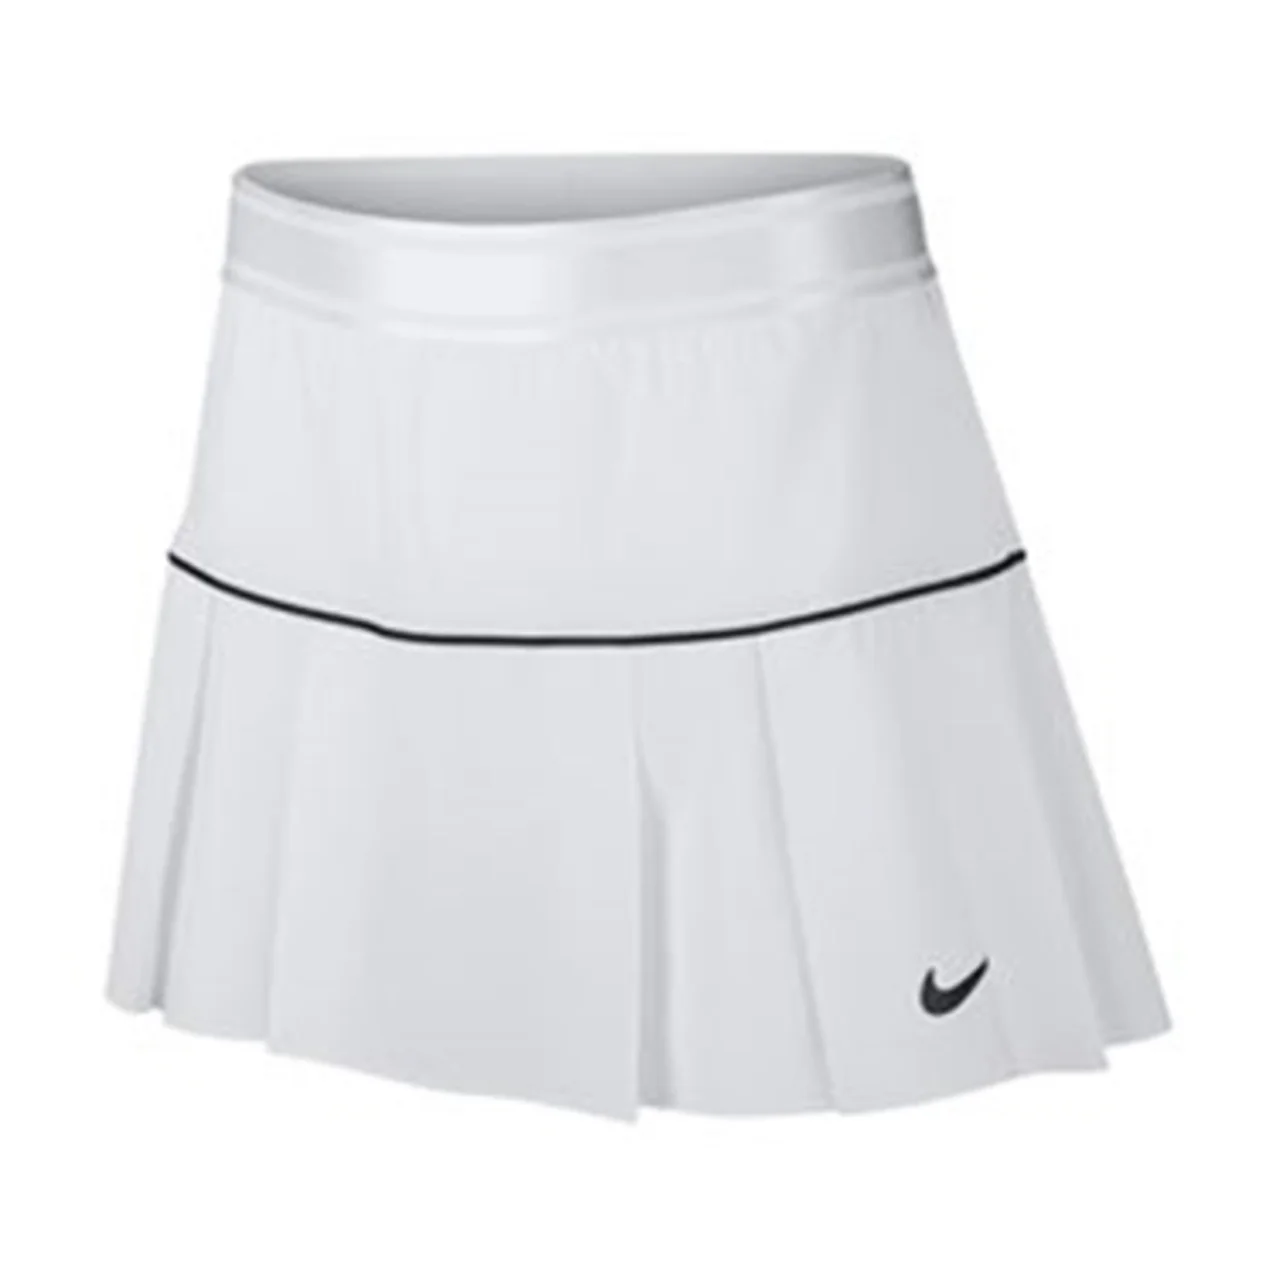 Nike Performance Victory Skirt White/Black